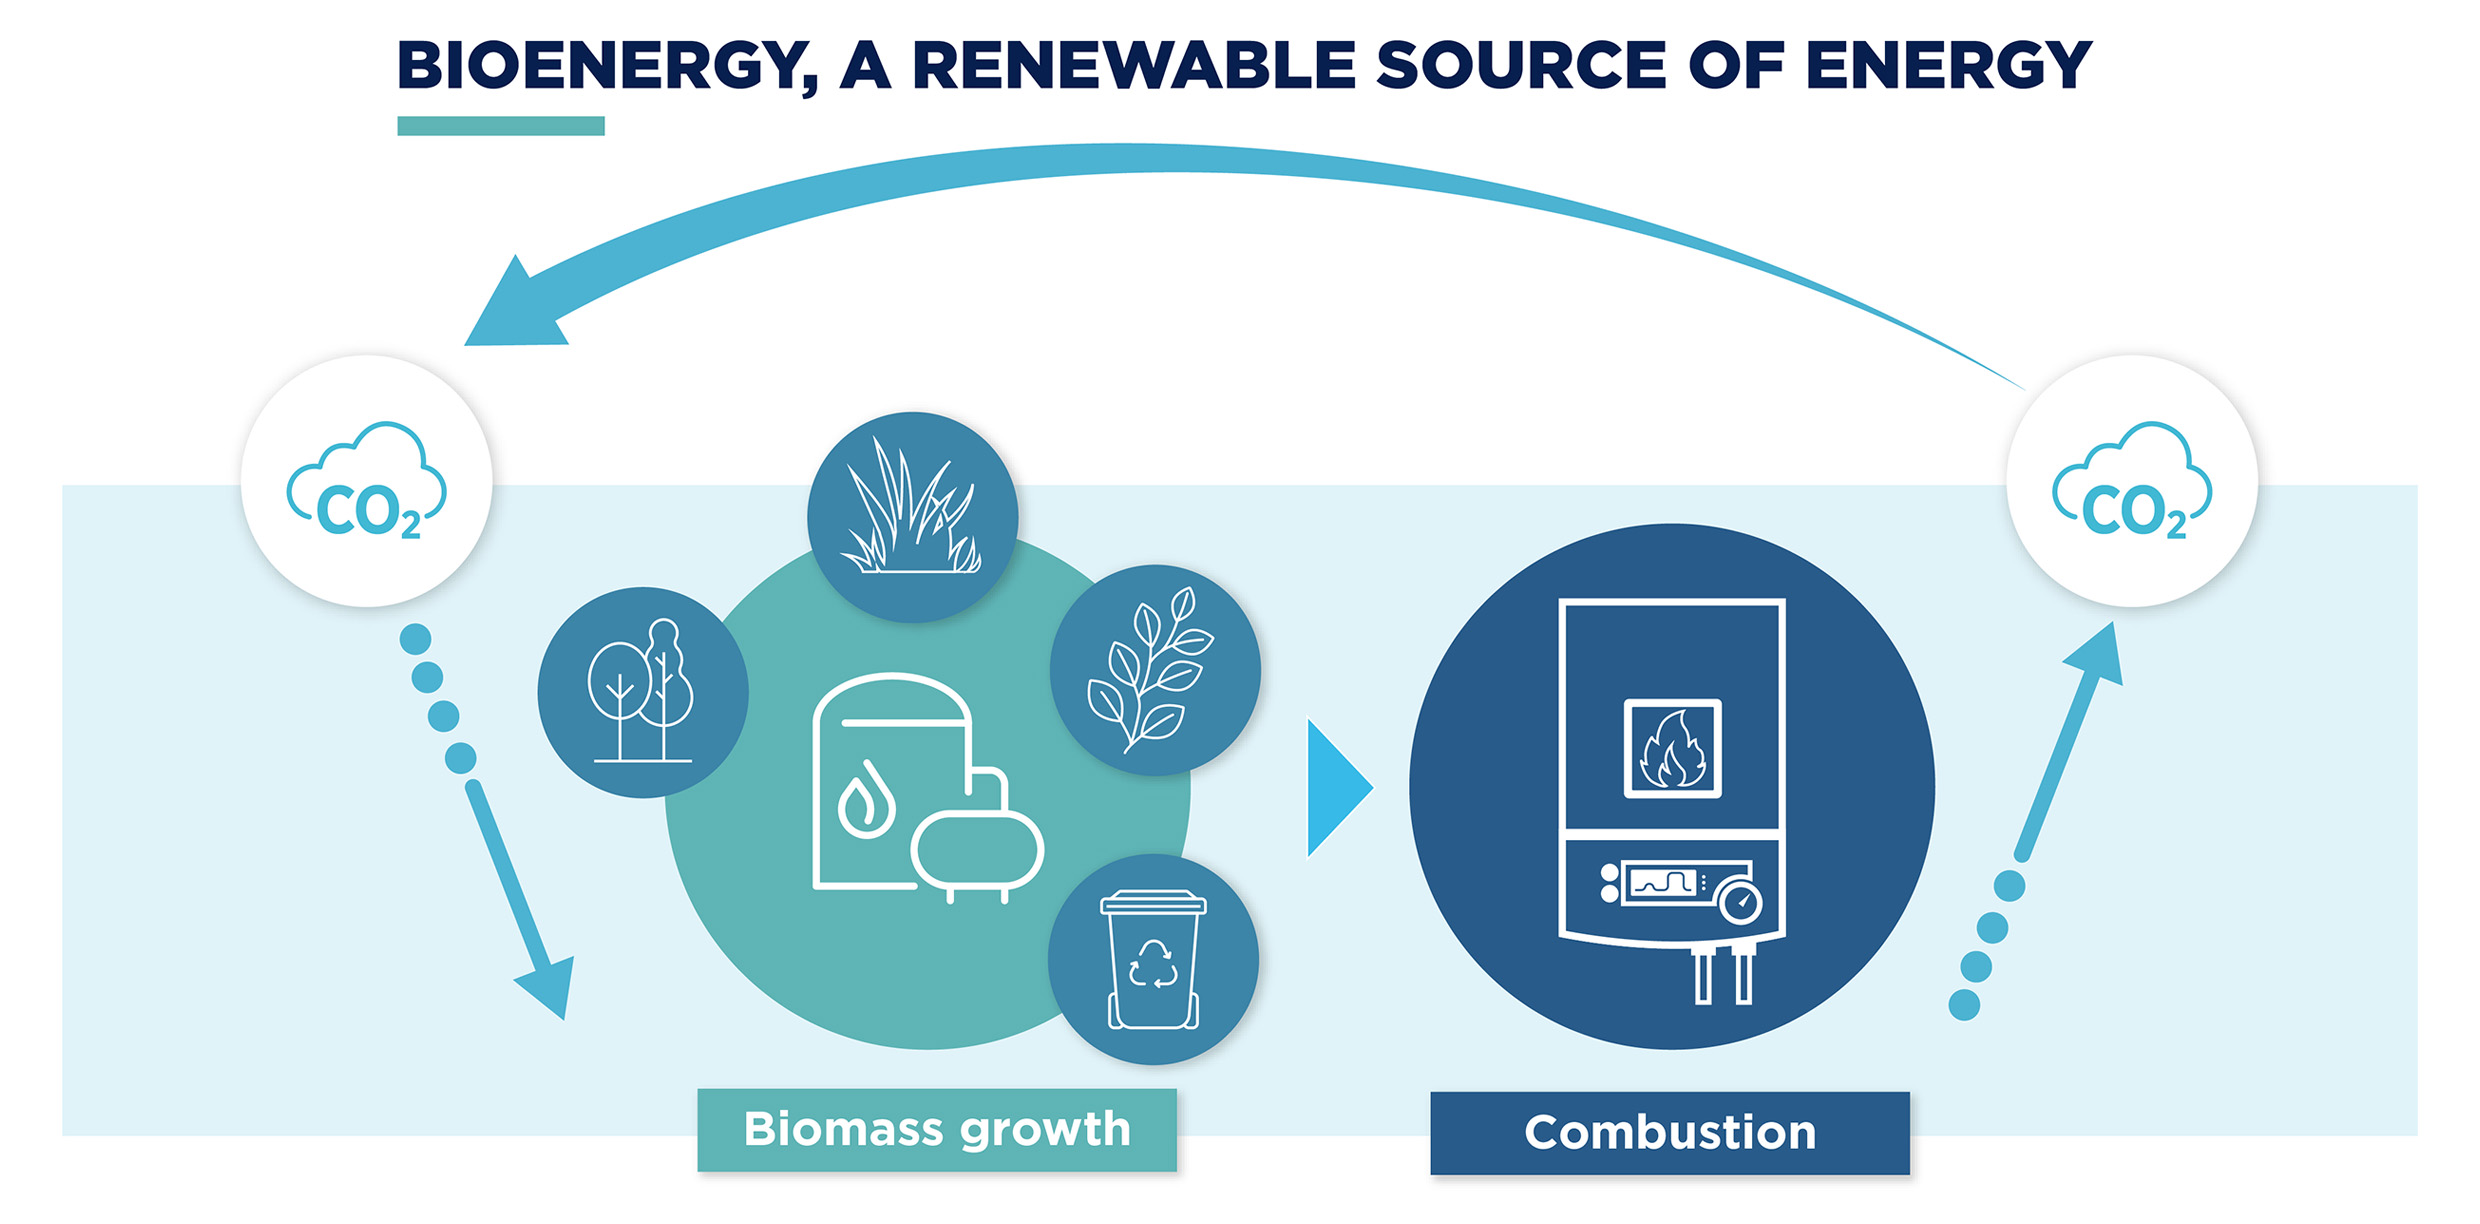 Bioenergy - A renewable source